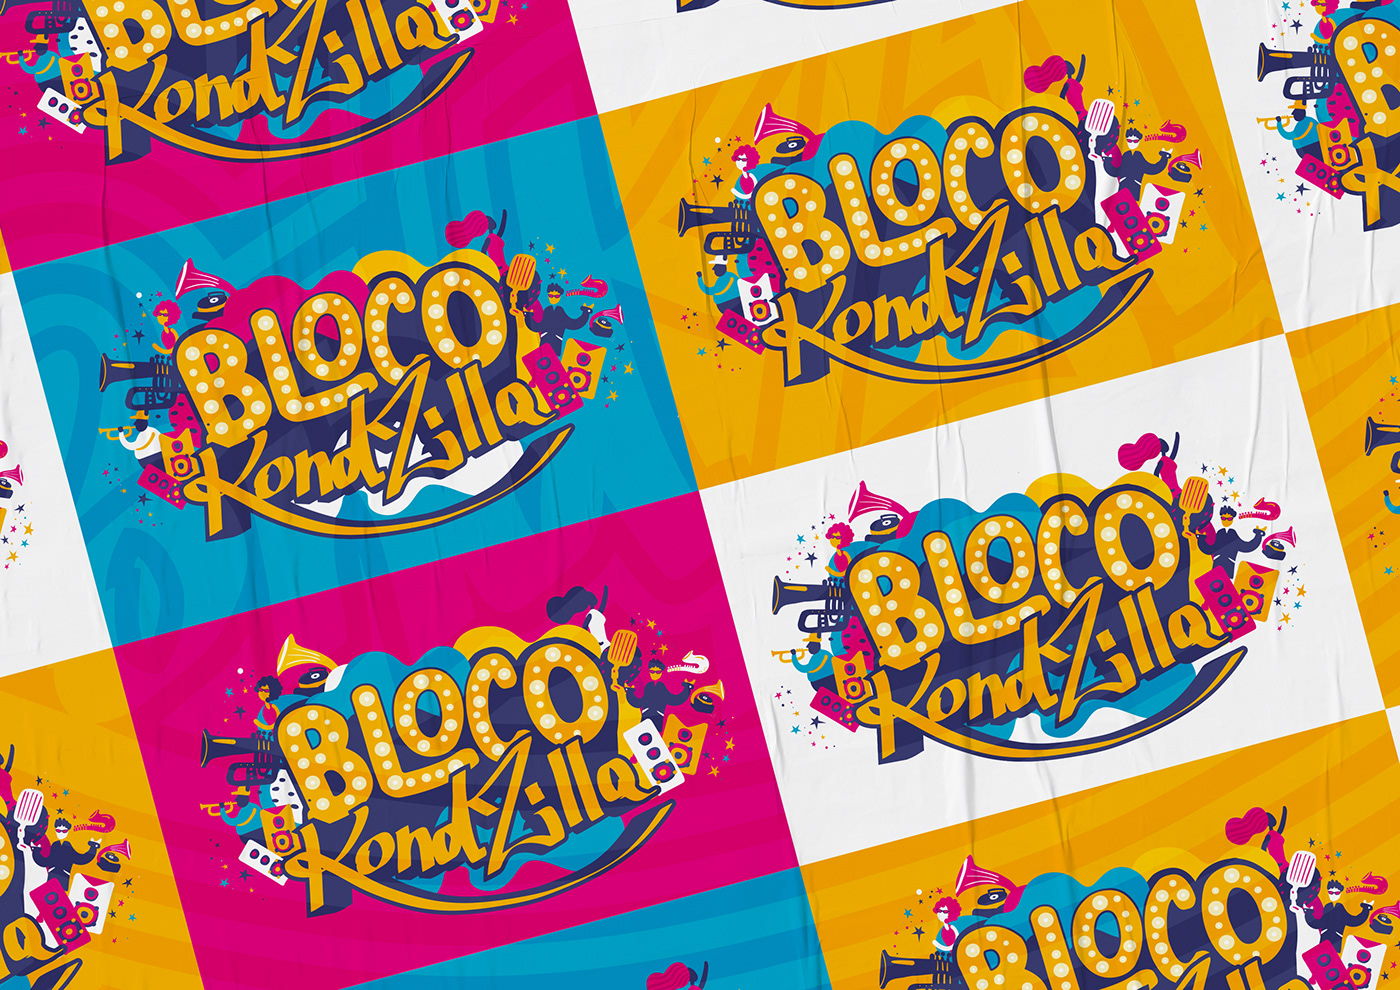 Baile Funk Carnaval kondzilla são paulo poster festival brand identity Graphic Designer visual identity party